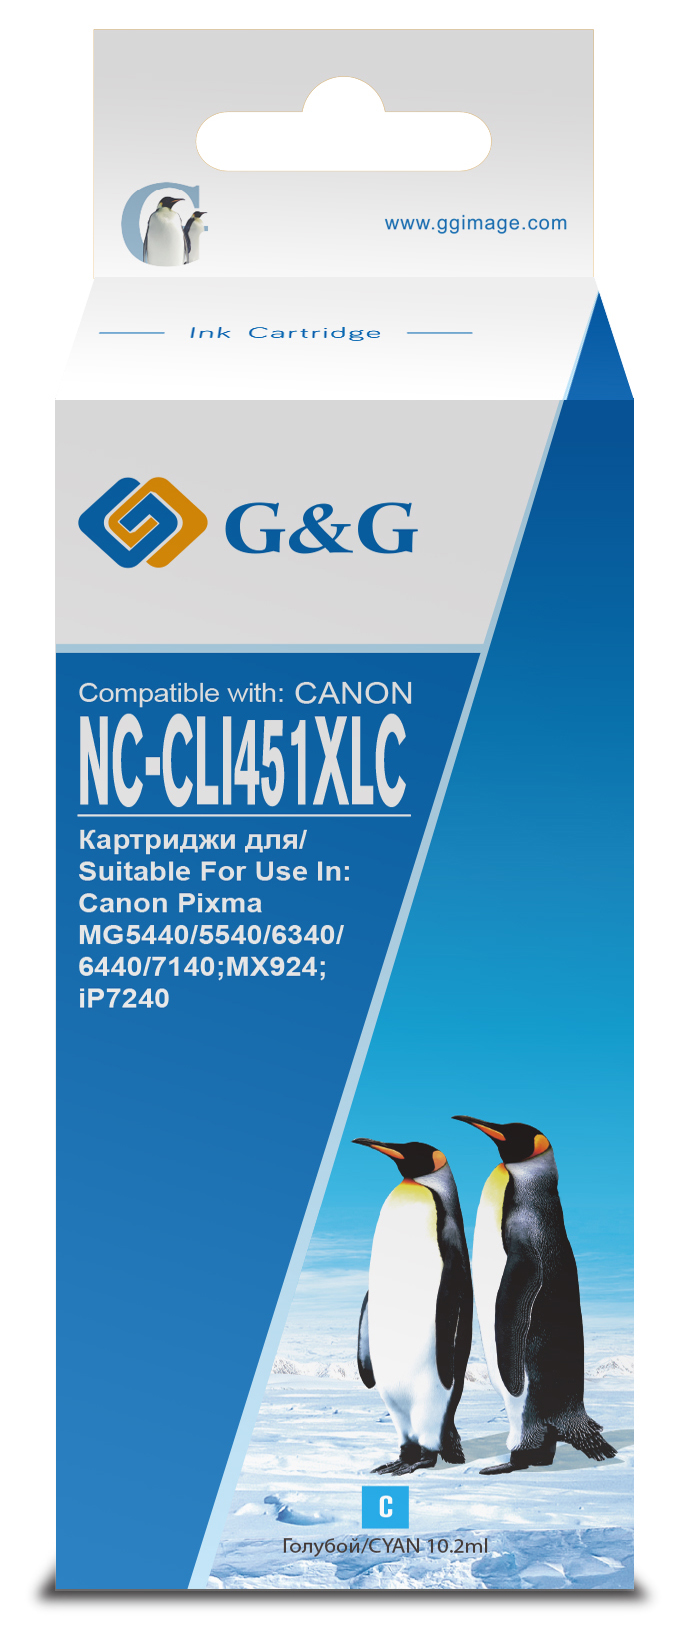 nc-cli451xlc_1